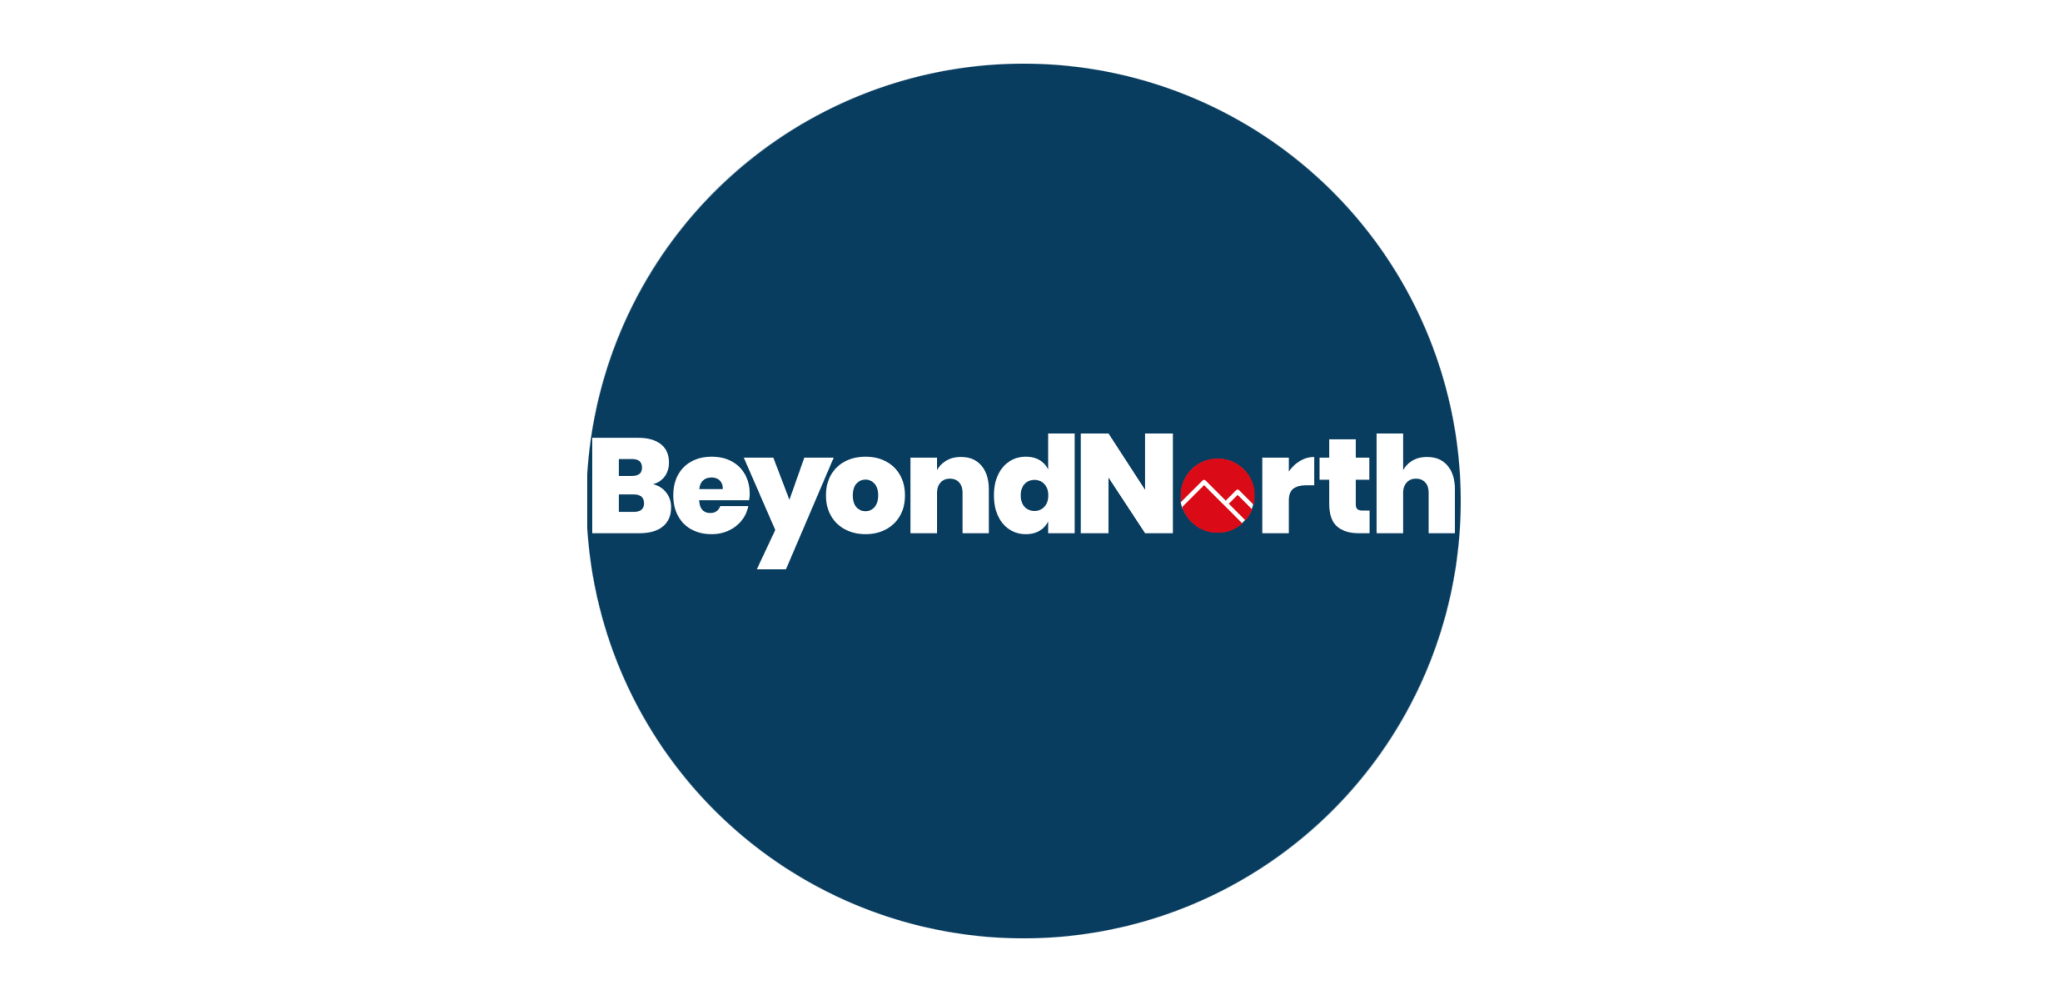 Let Us Help You Navigate the Digital World - Beyond North